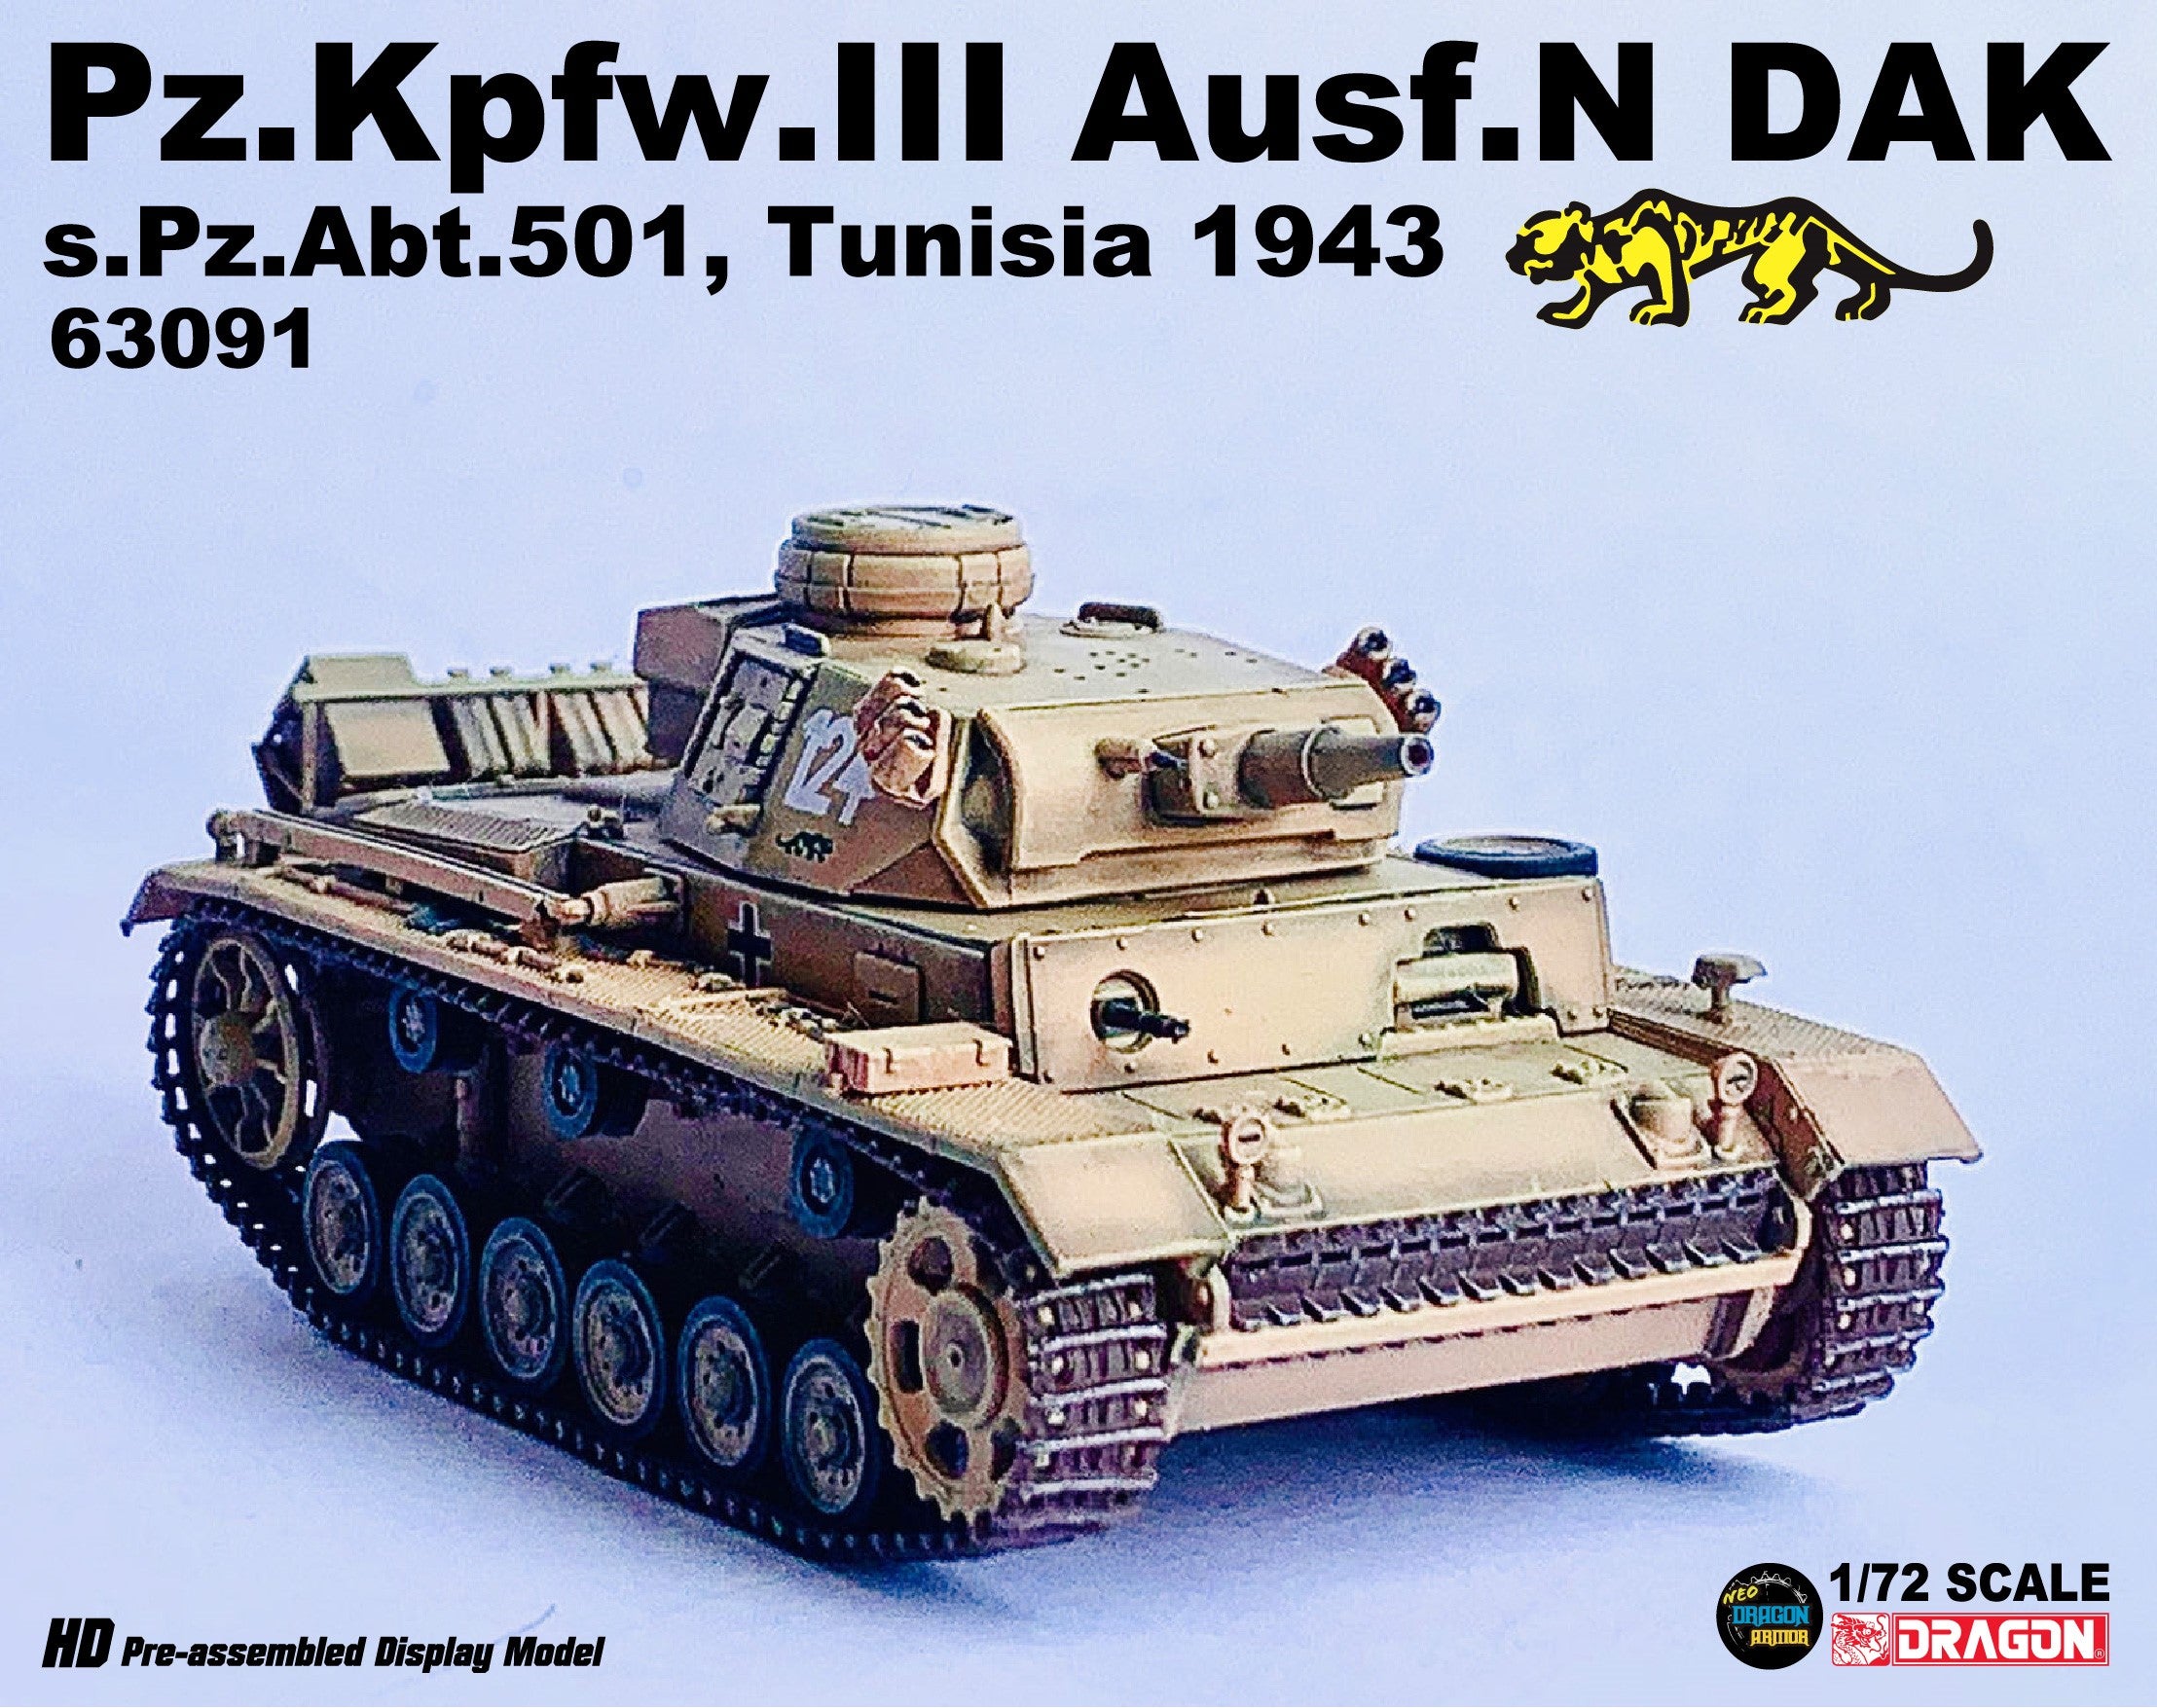 63091 - 1/72 Pz.Kpfw.III Ausf.N DAK s.Pz.Abt.501 Tunisia 1942/43 (w/